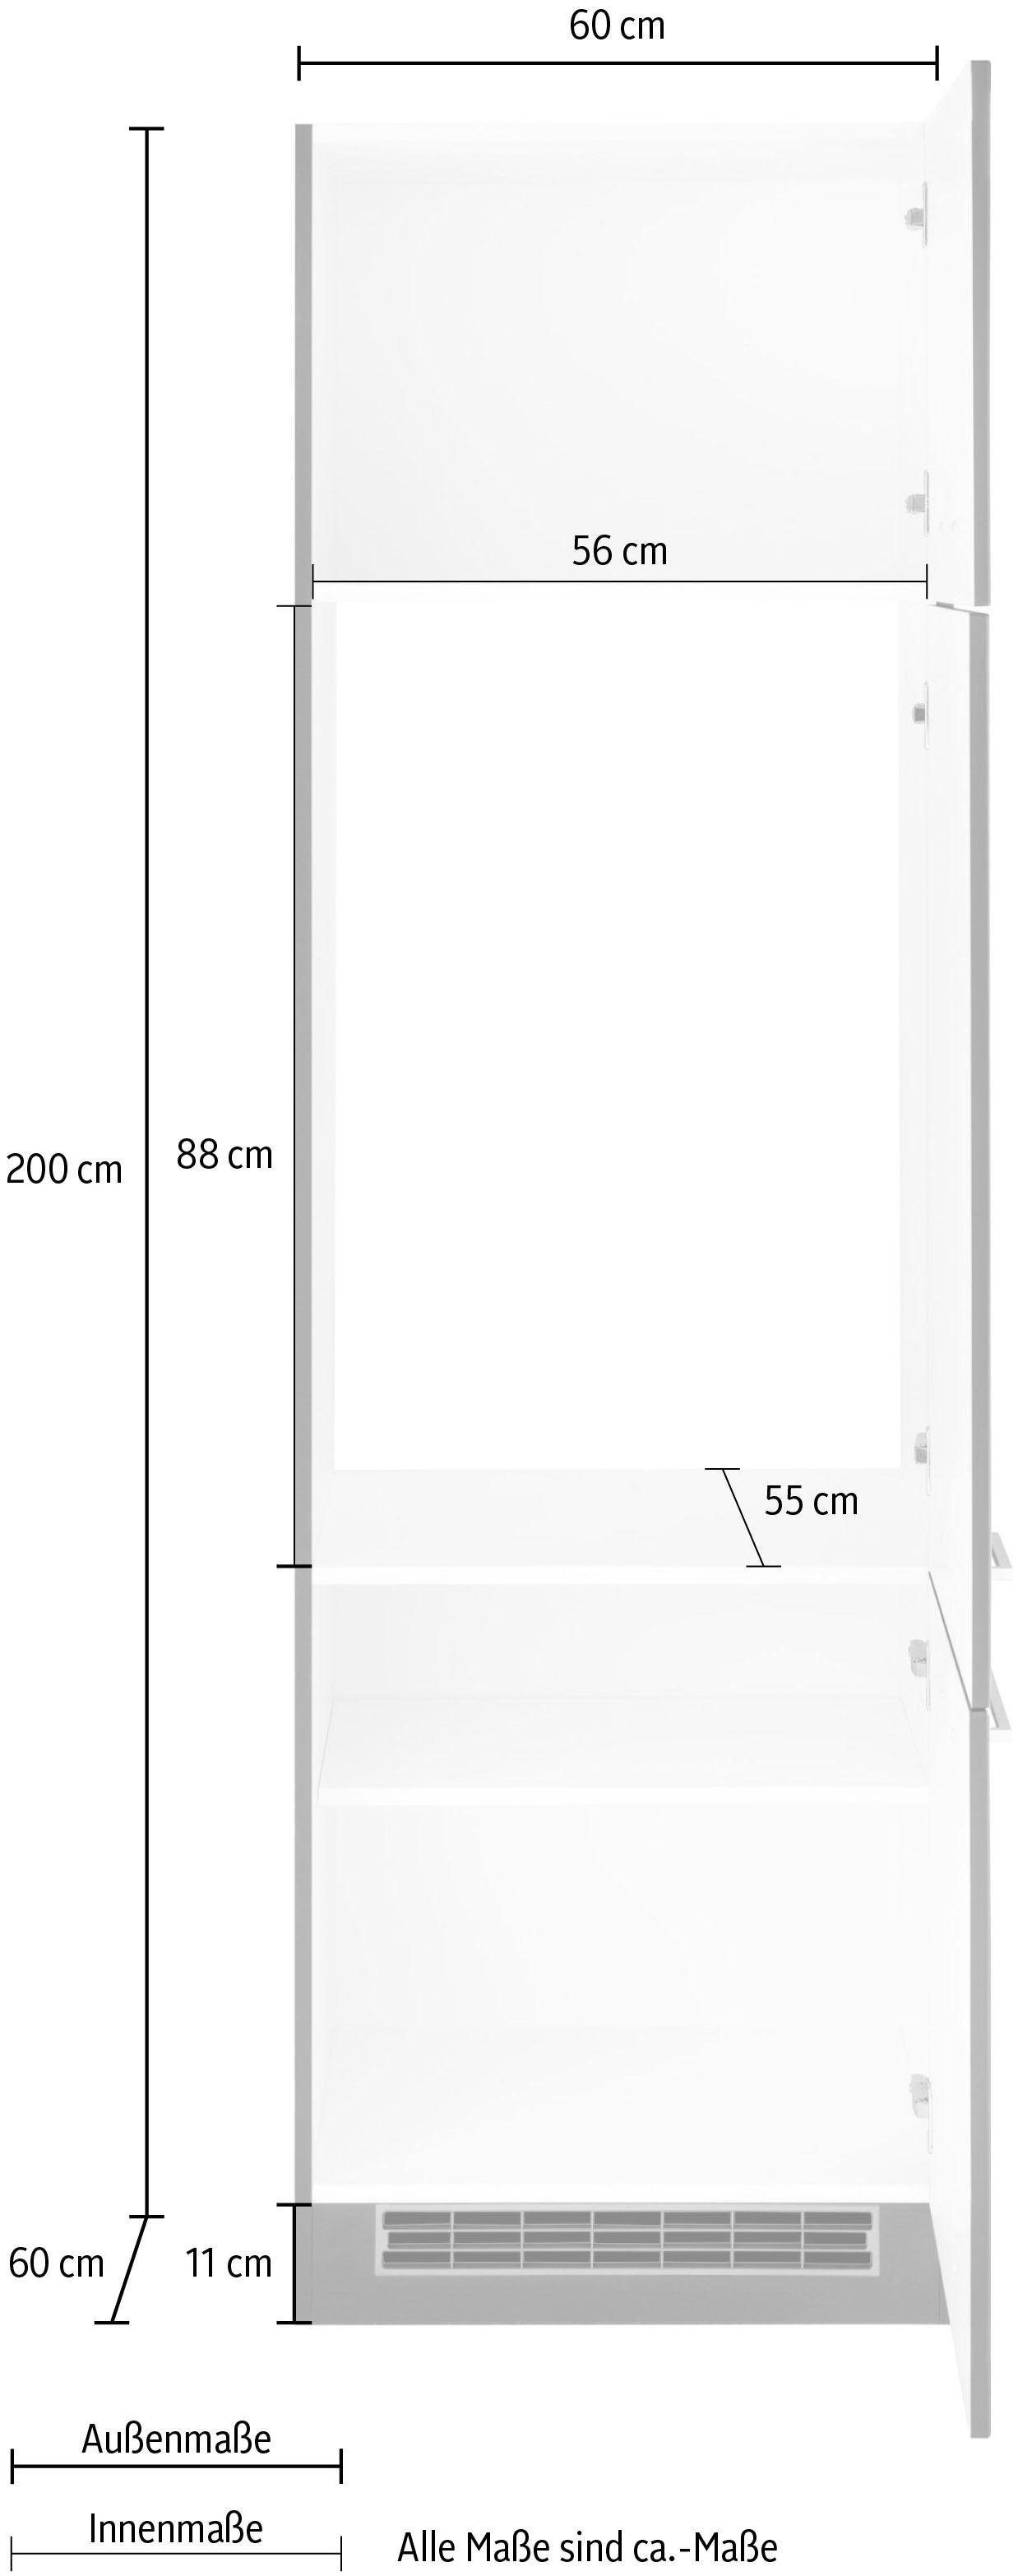 HELD MÖBEL Kühlumbauschrank für Nischenhöhe 88cm Einbaukühlschrank, grafit | grau Kehl